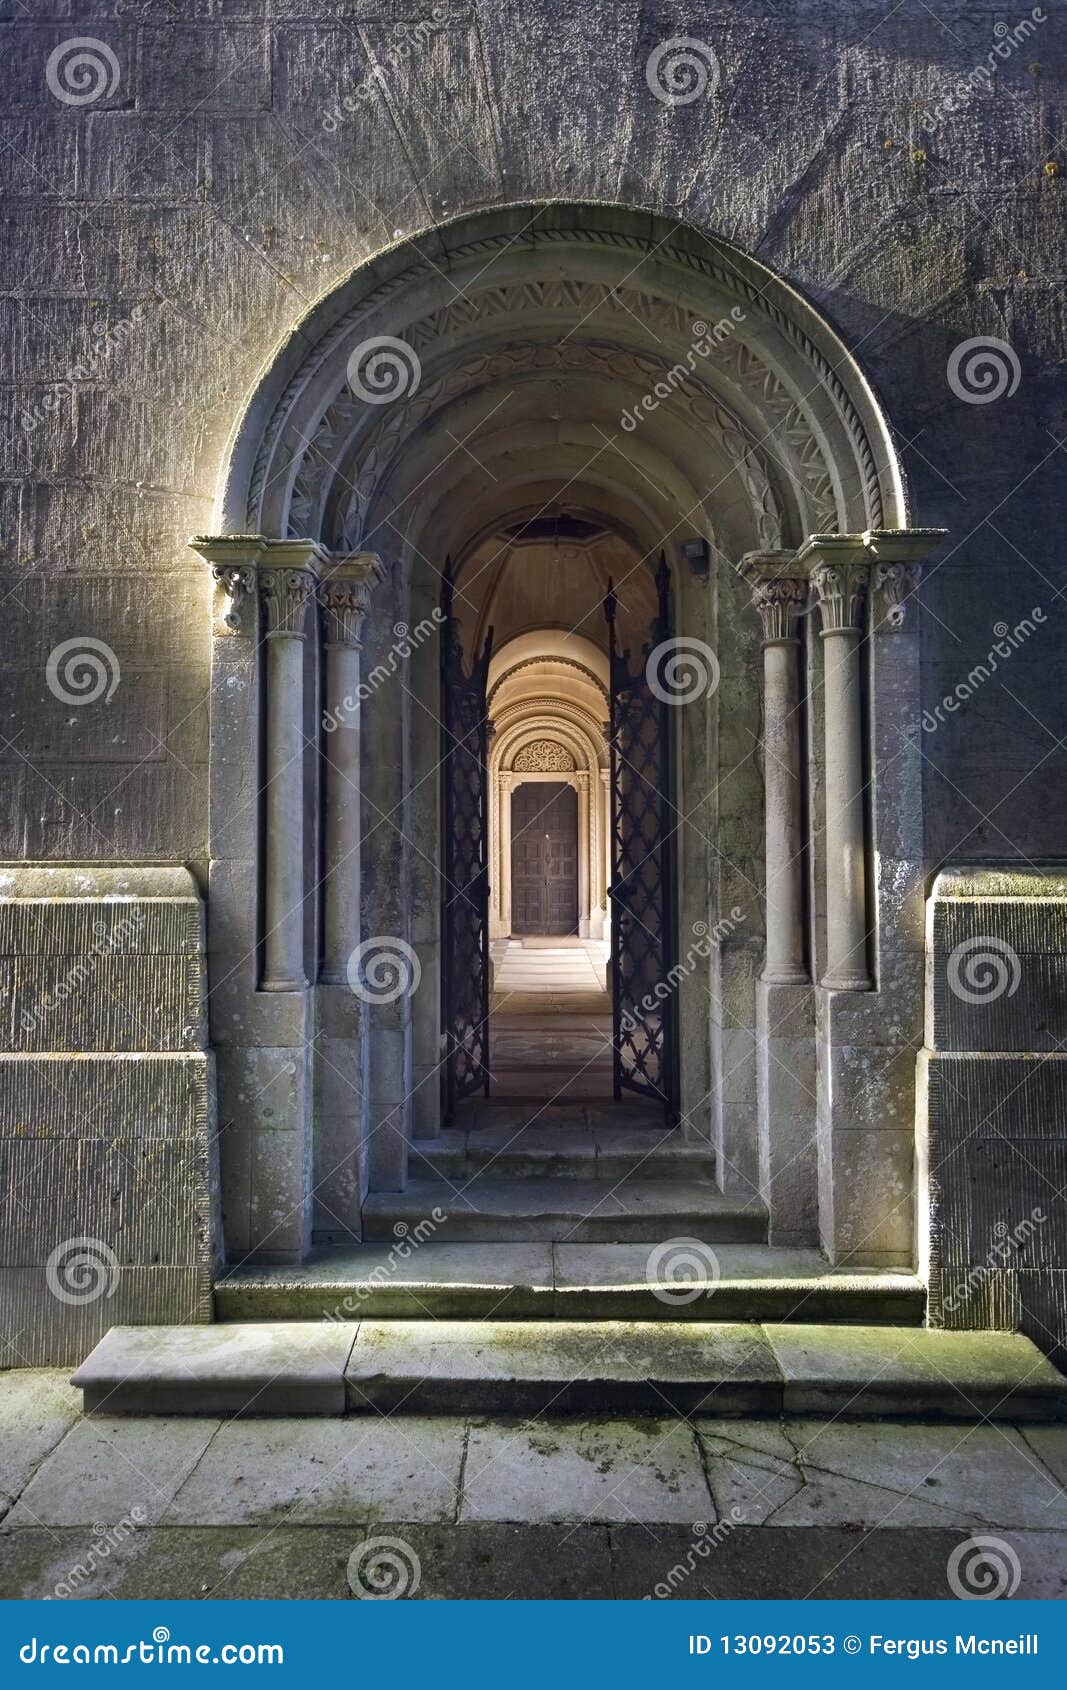 arched stone doorway